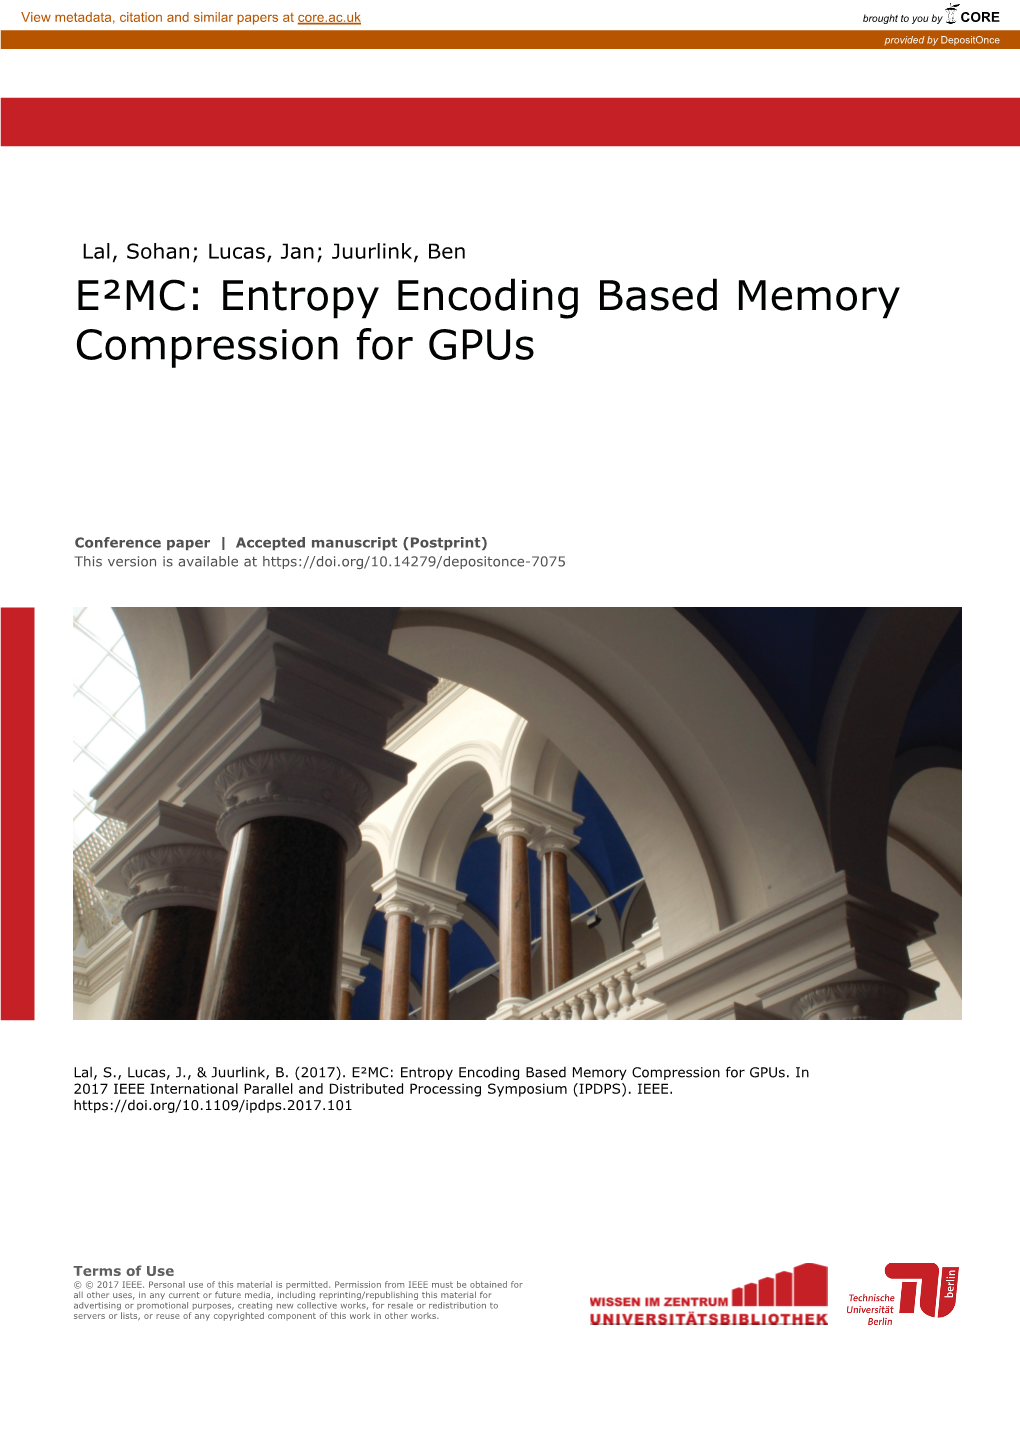 Entropy Encoding Based Memory Compression for Gpus